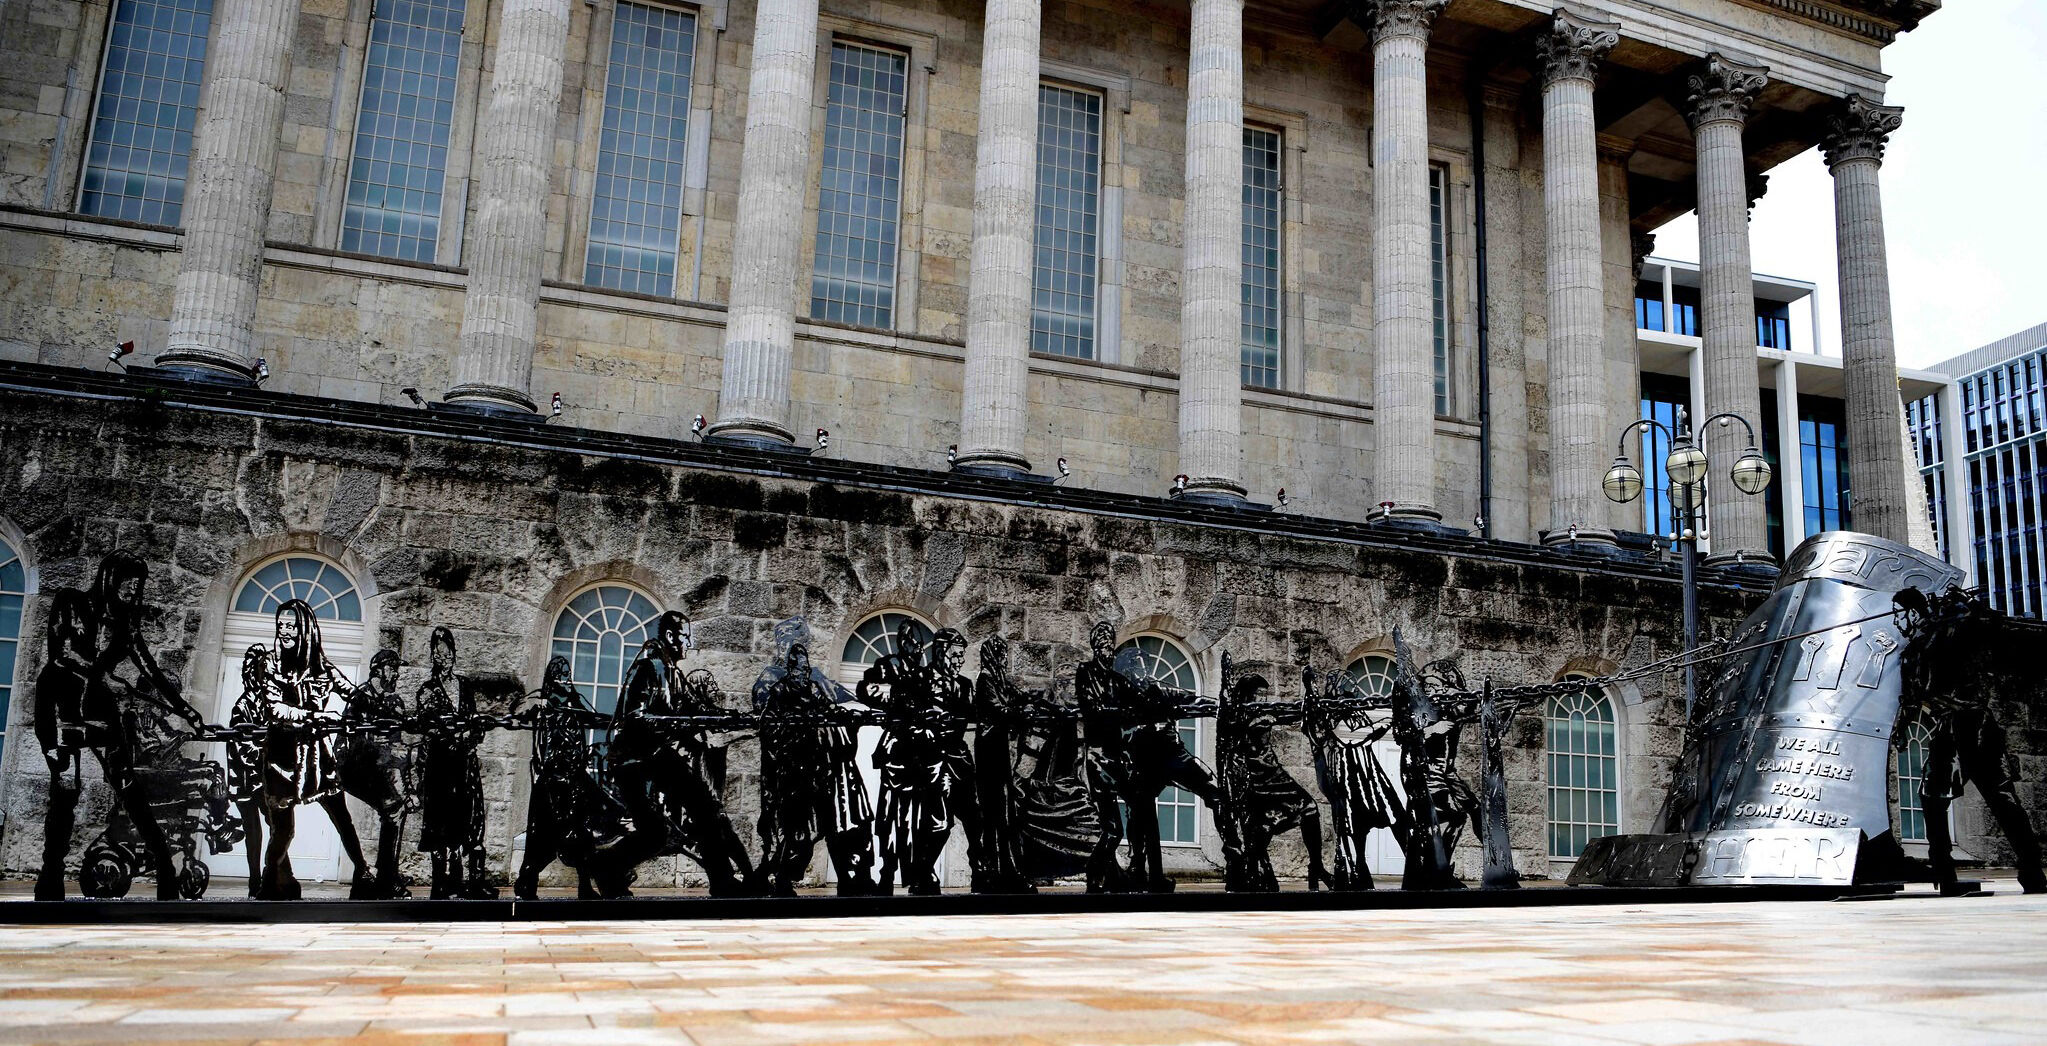 Image of Birmingham city centre art installation, featuring black metal sculptures